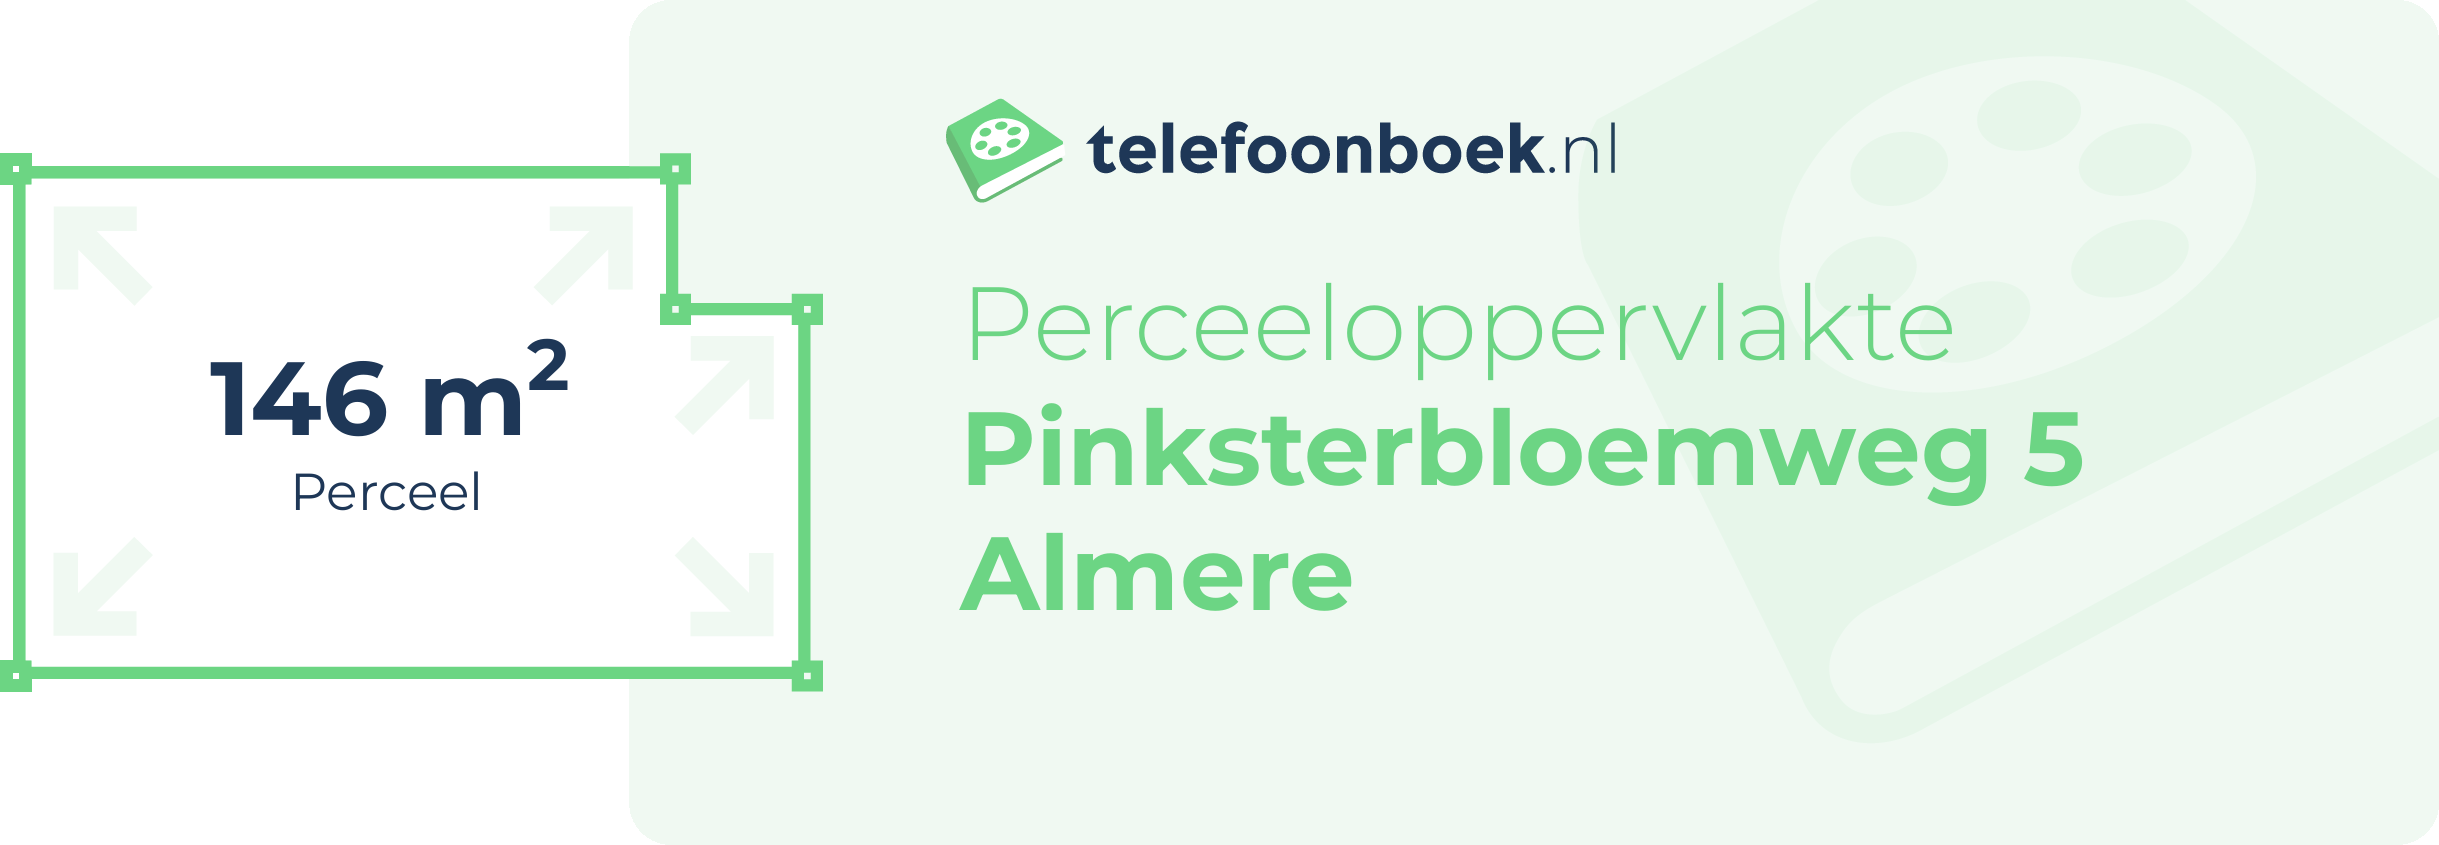 Perceeloppervlakte Pinksterbloemweg 5 Almere